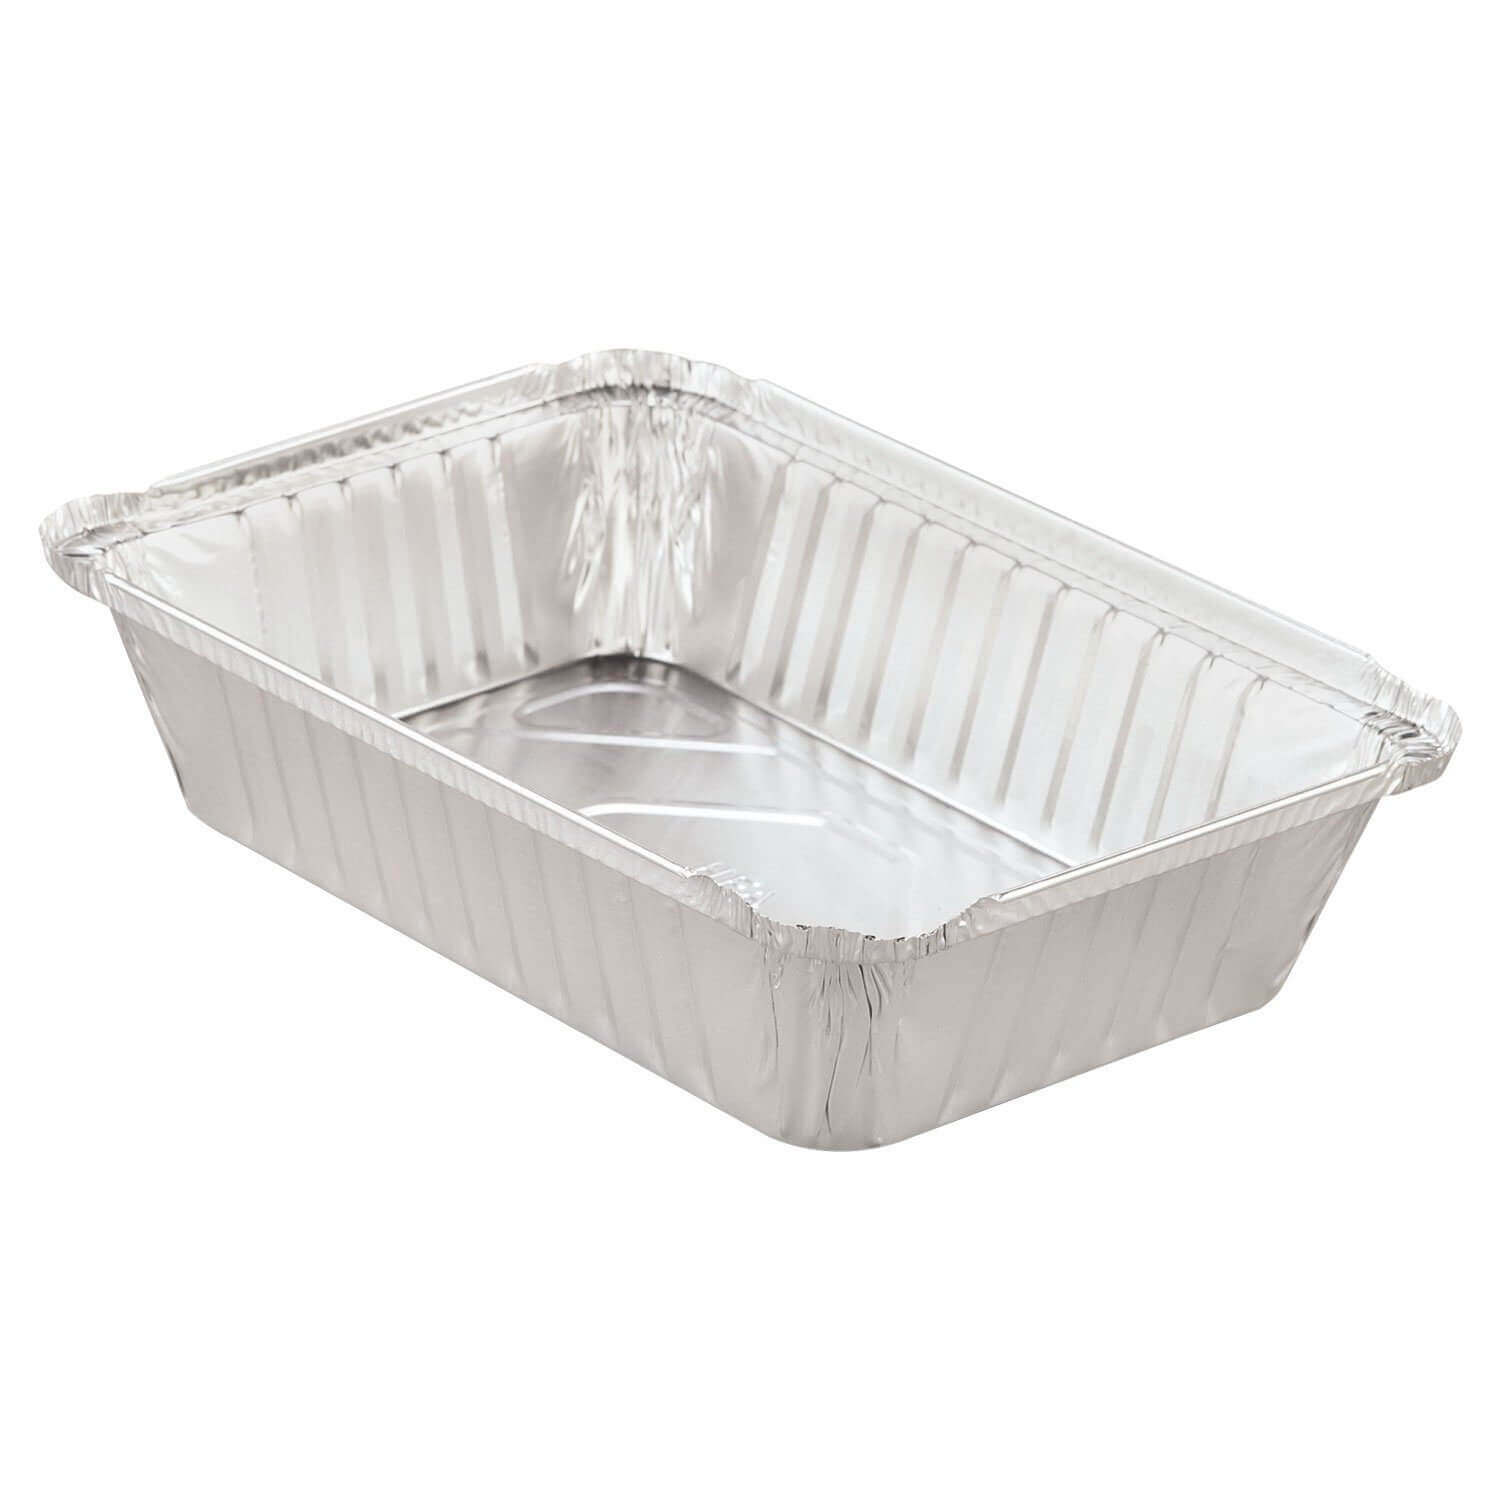 1 lb Oblong Aluminum Foil Take-Out Disposable Pan with Dome Lids